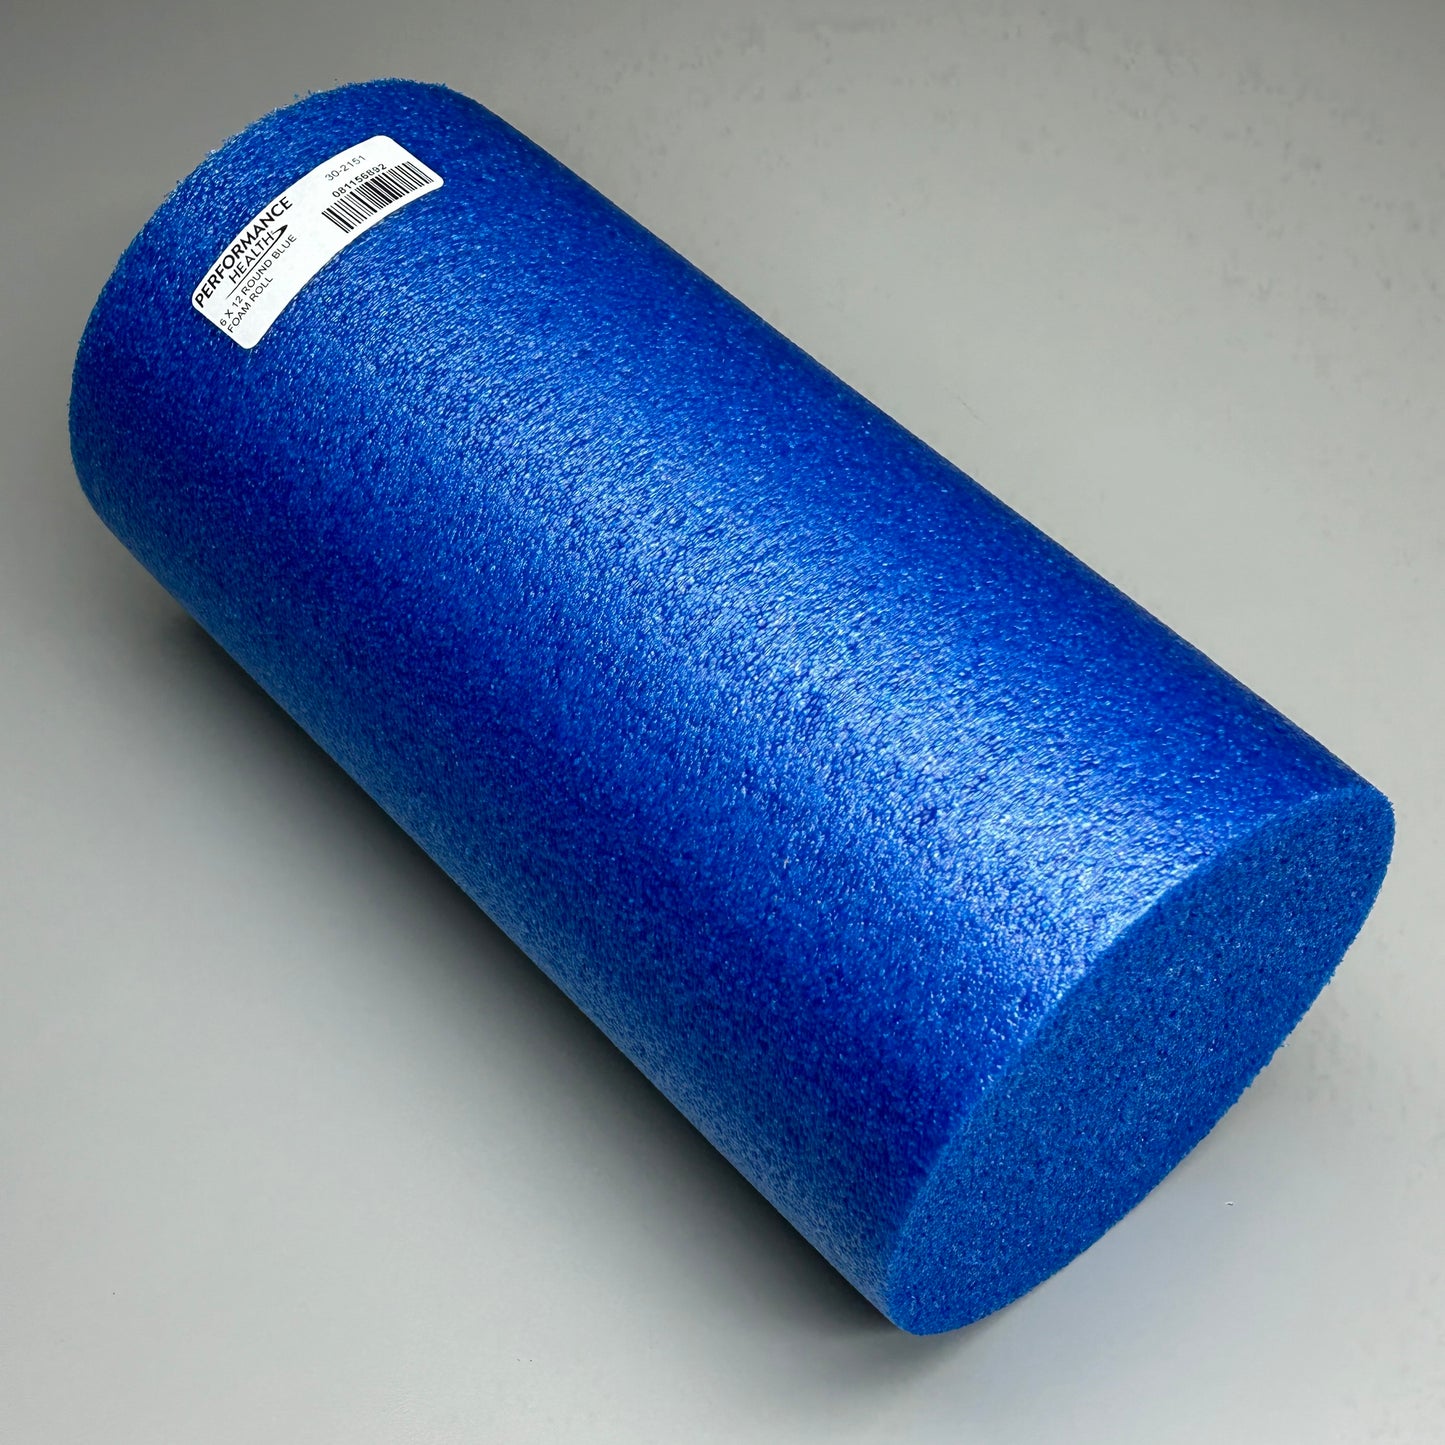 CANDO 6x12 Round Foam Roll Blue (New)